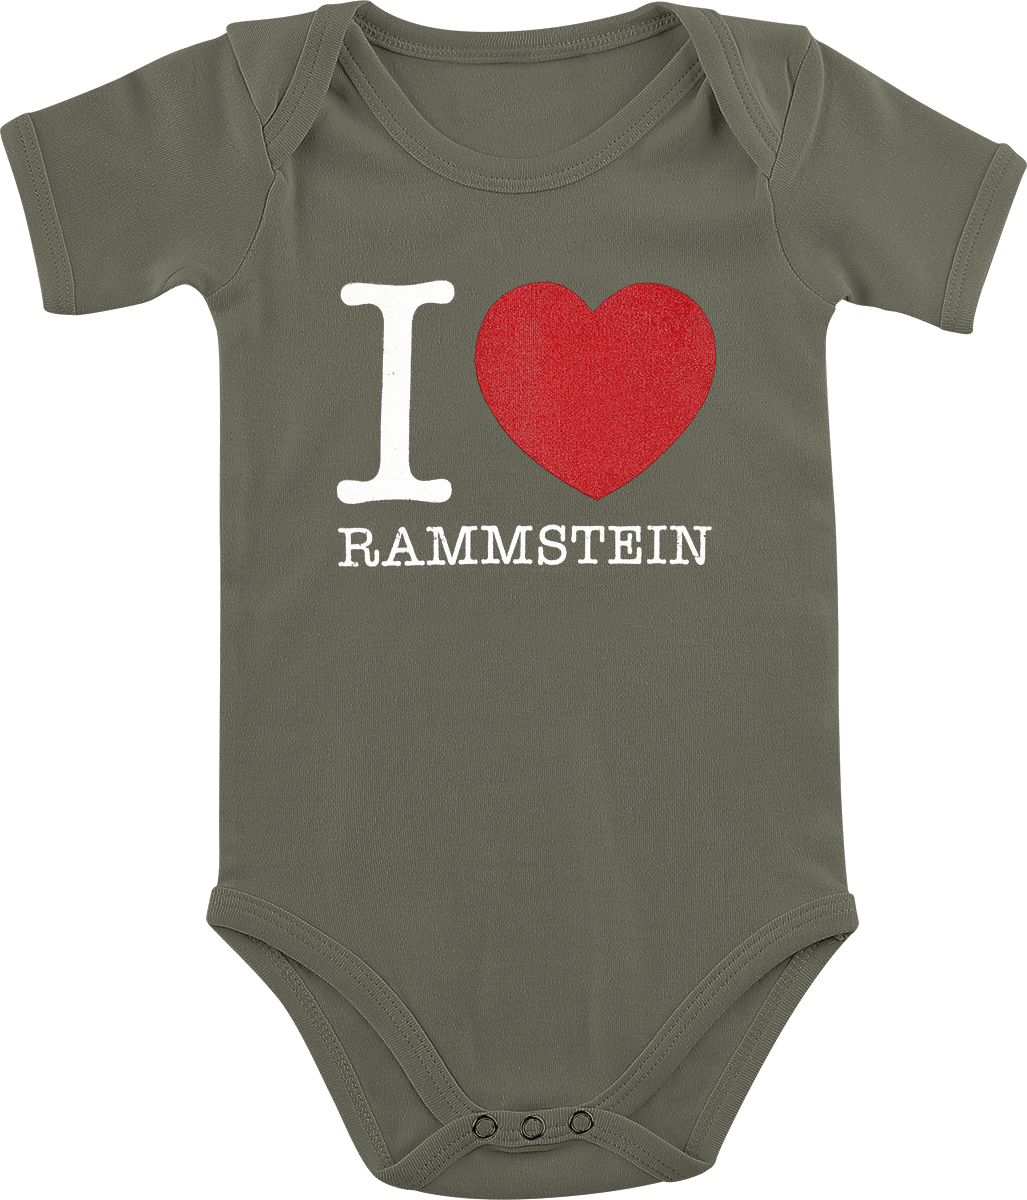 Rammstein - Kids - I Love Rammstein - Body - khaki